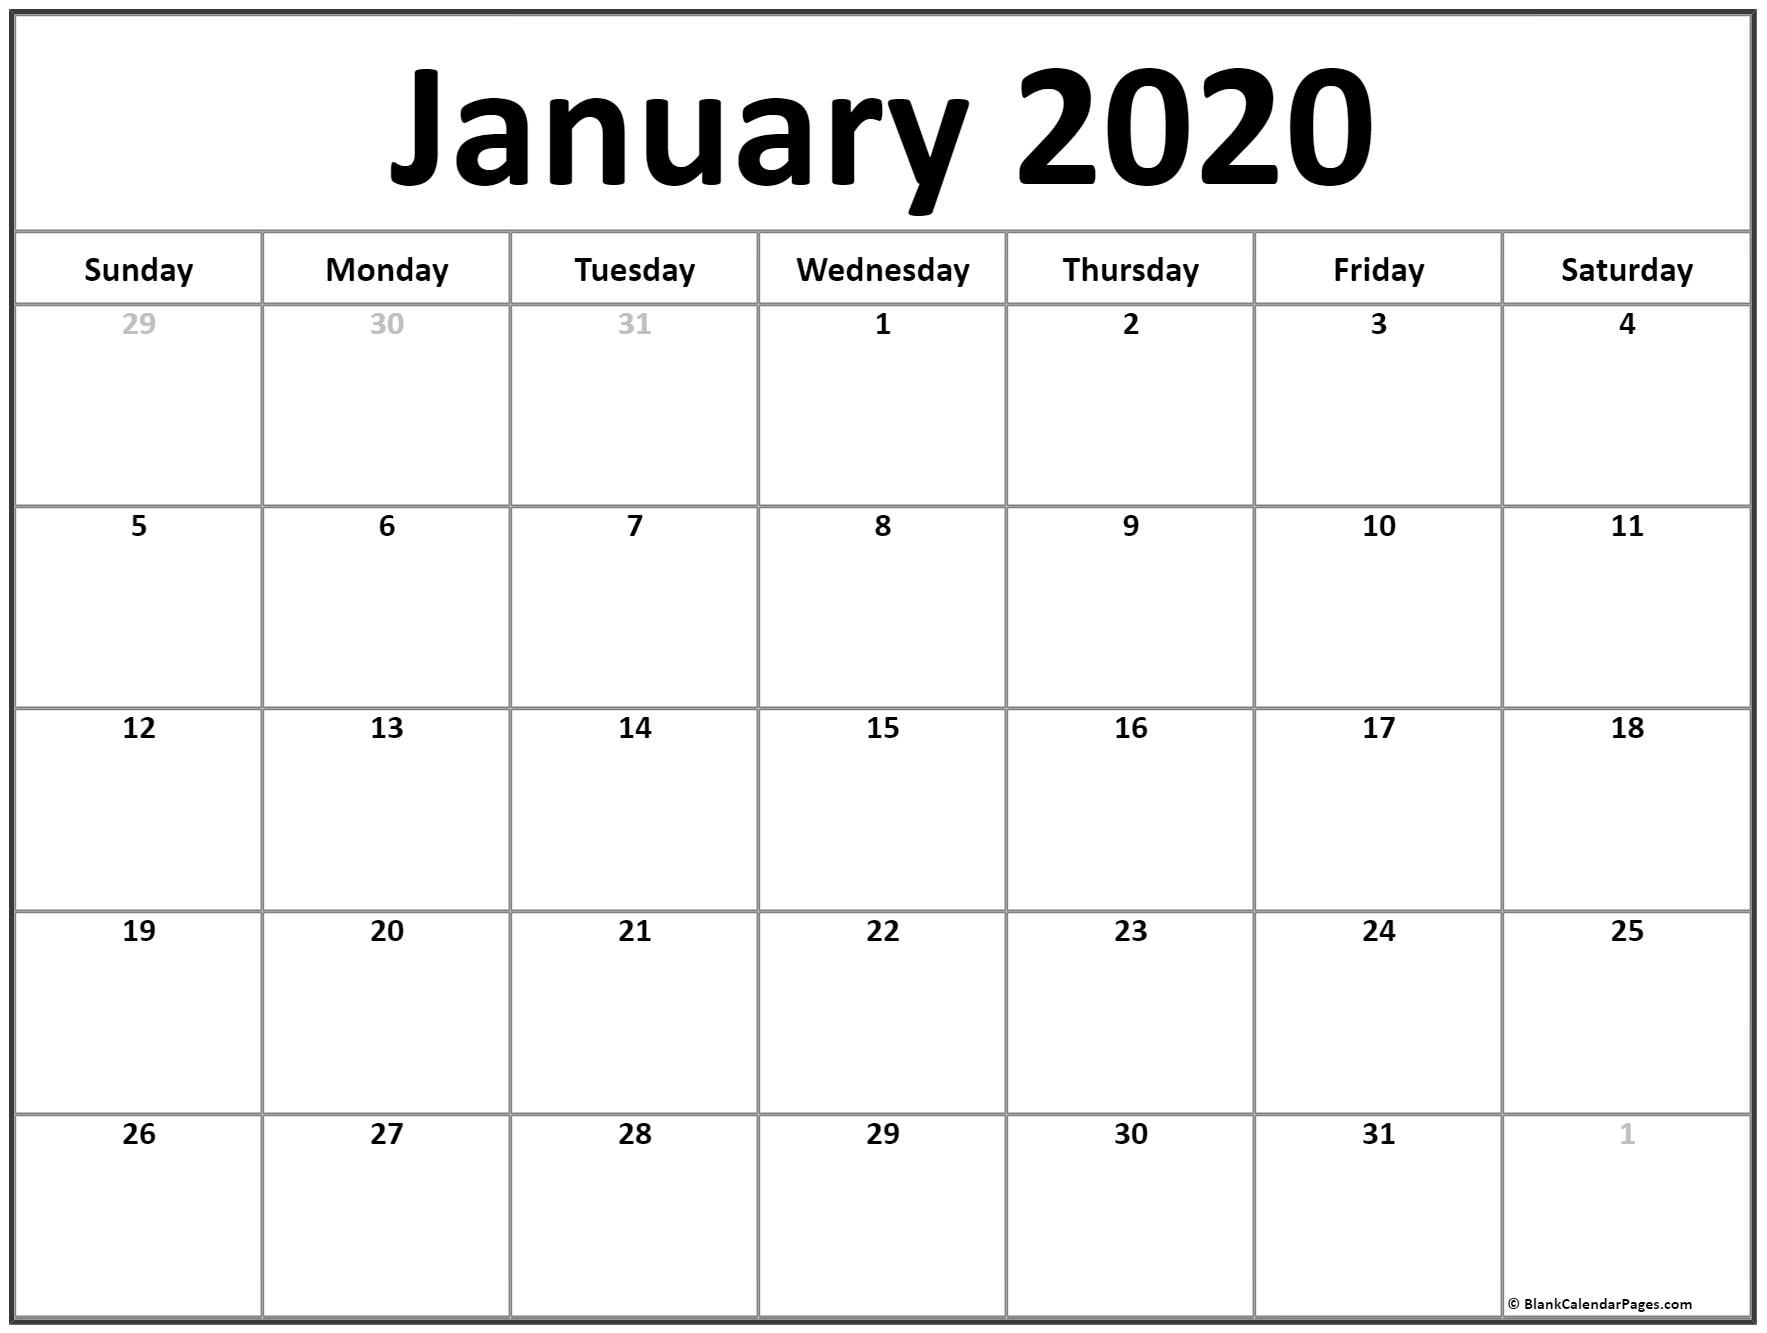 January 2020 Calendar | Free Printable Monthly Calendars Free Printable Calendar January 2020